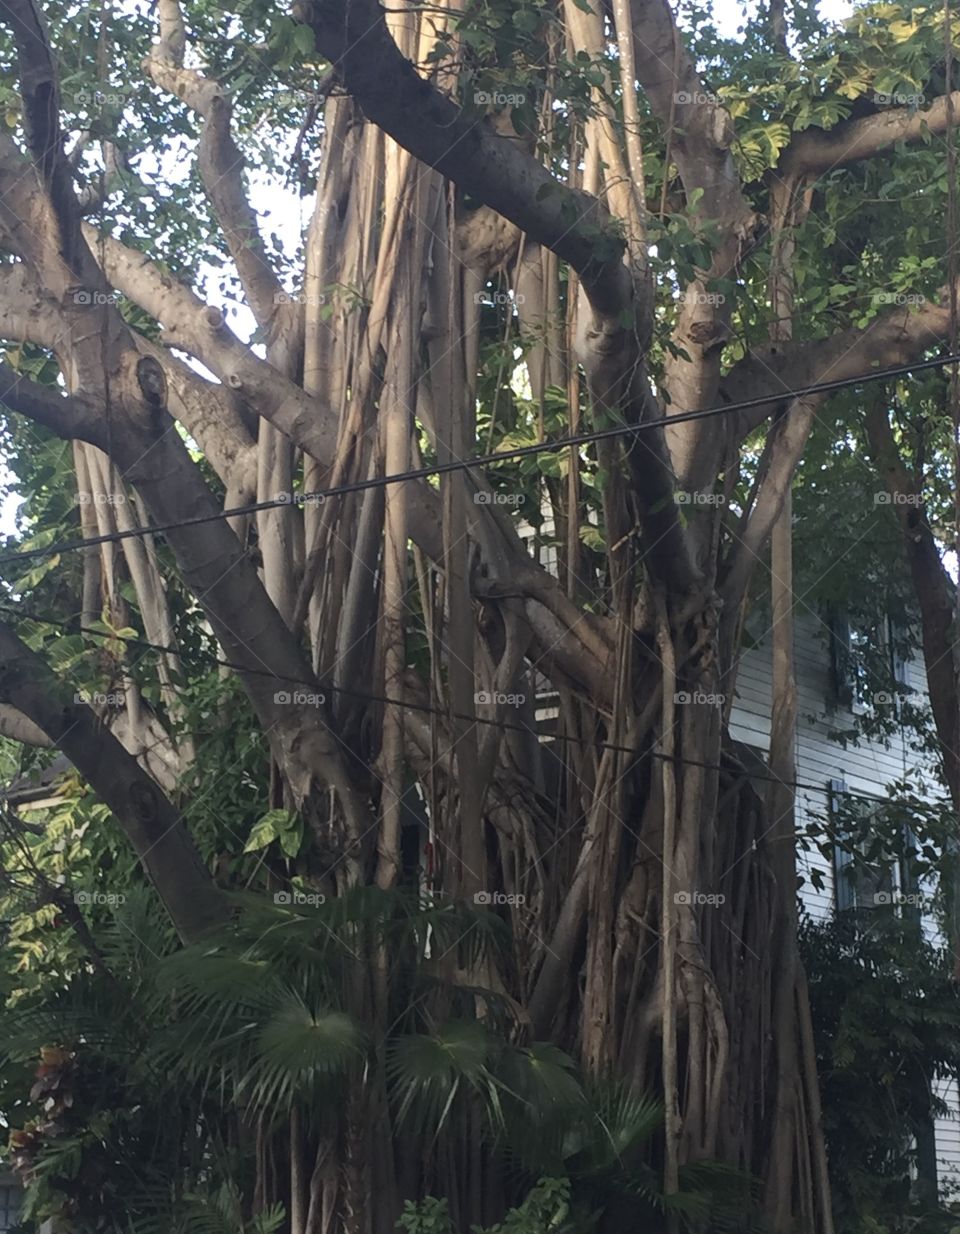 Banyan Tree, Key West, FL